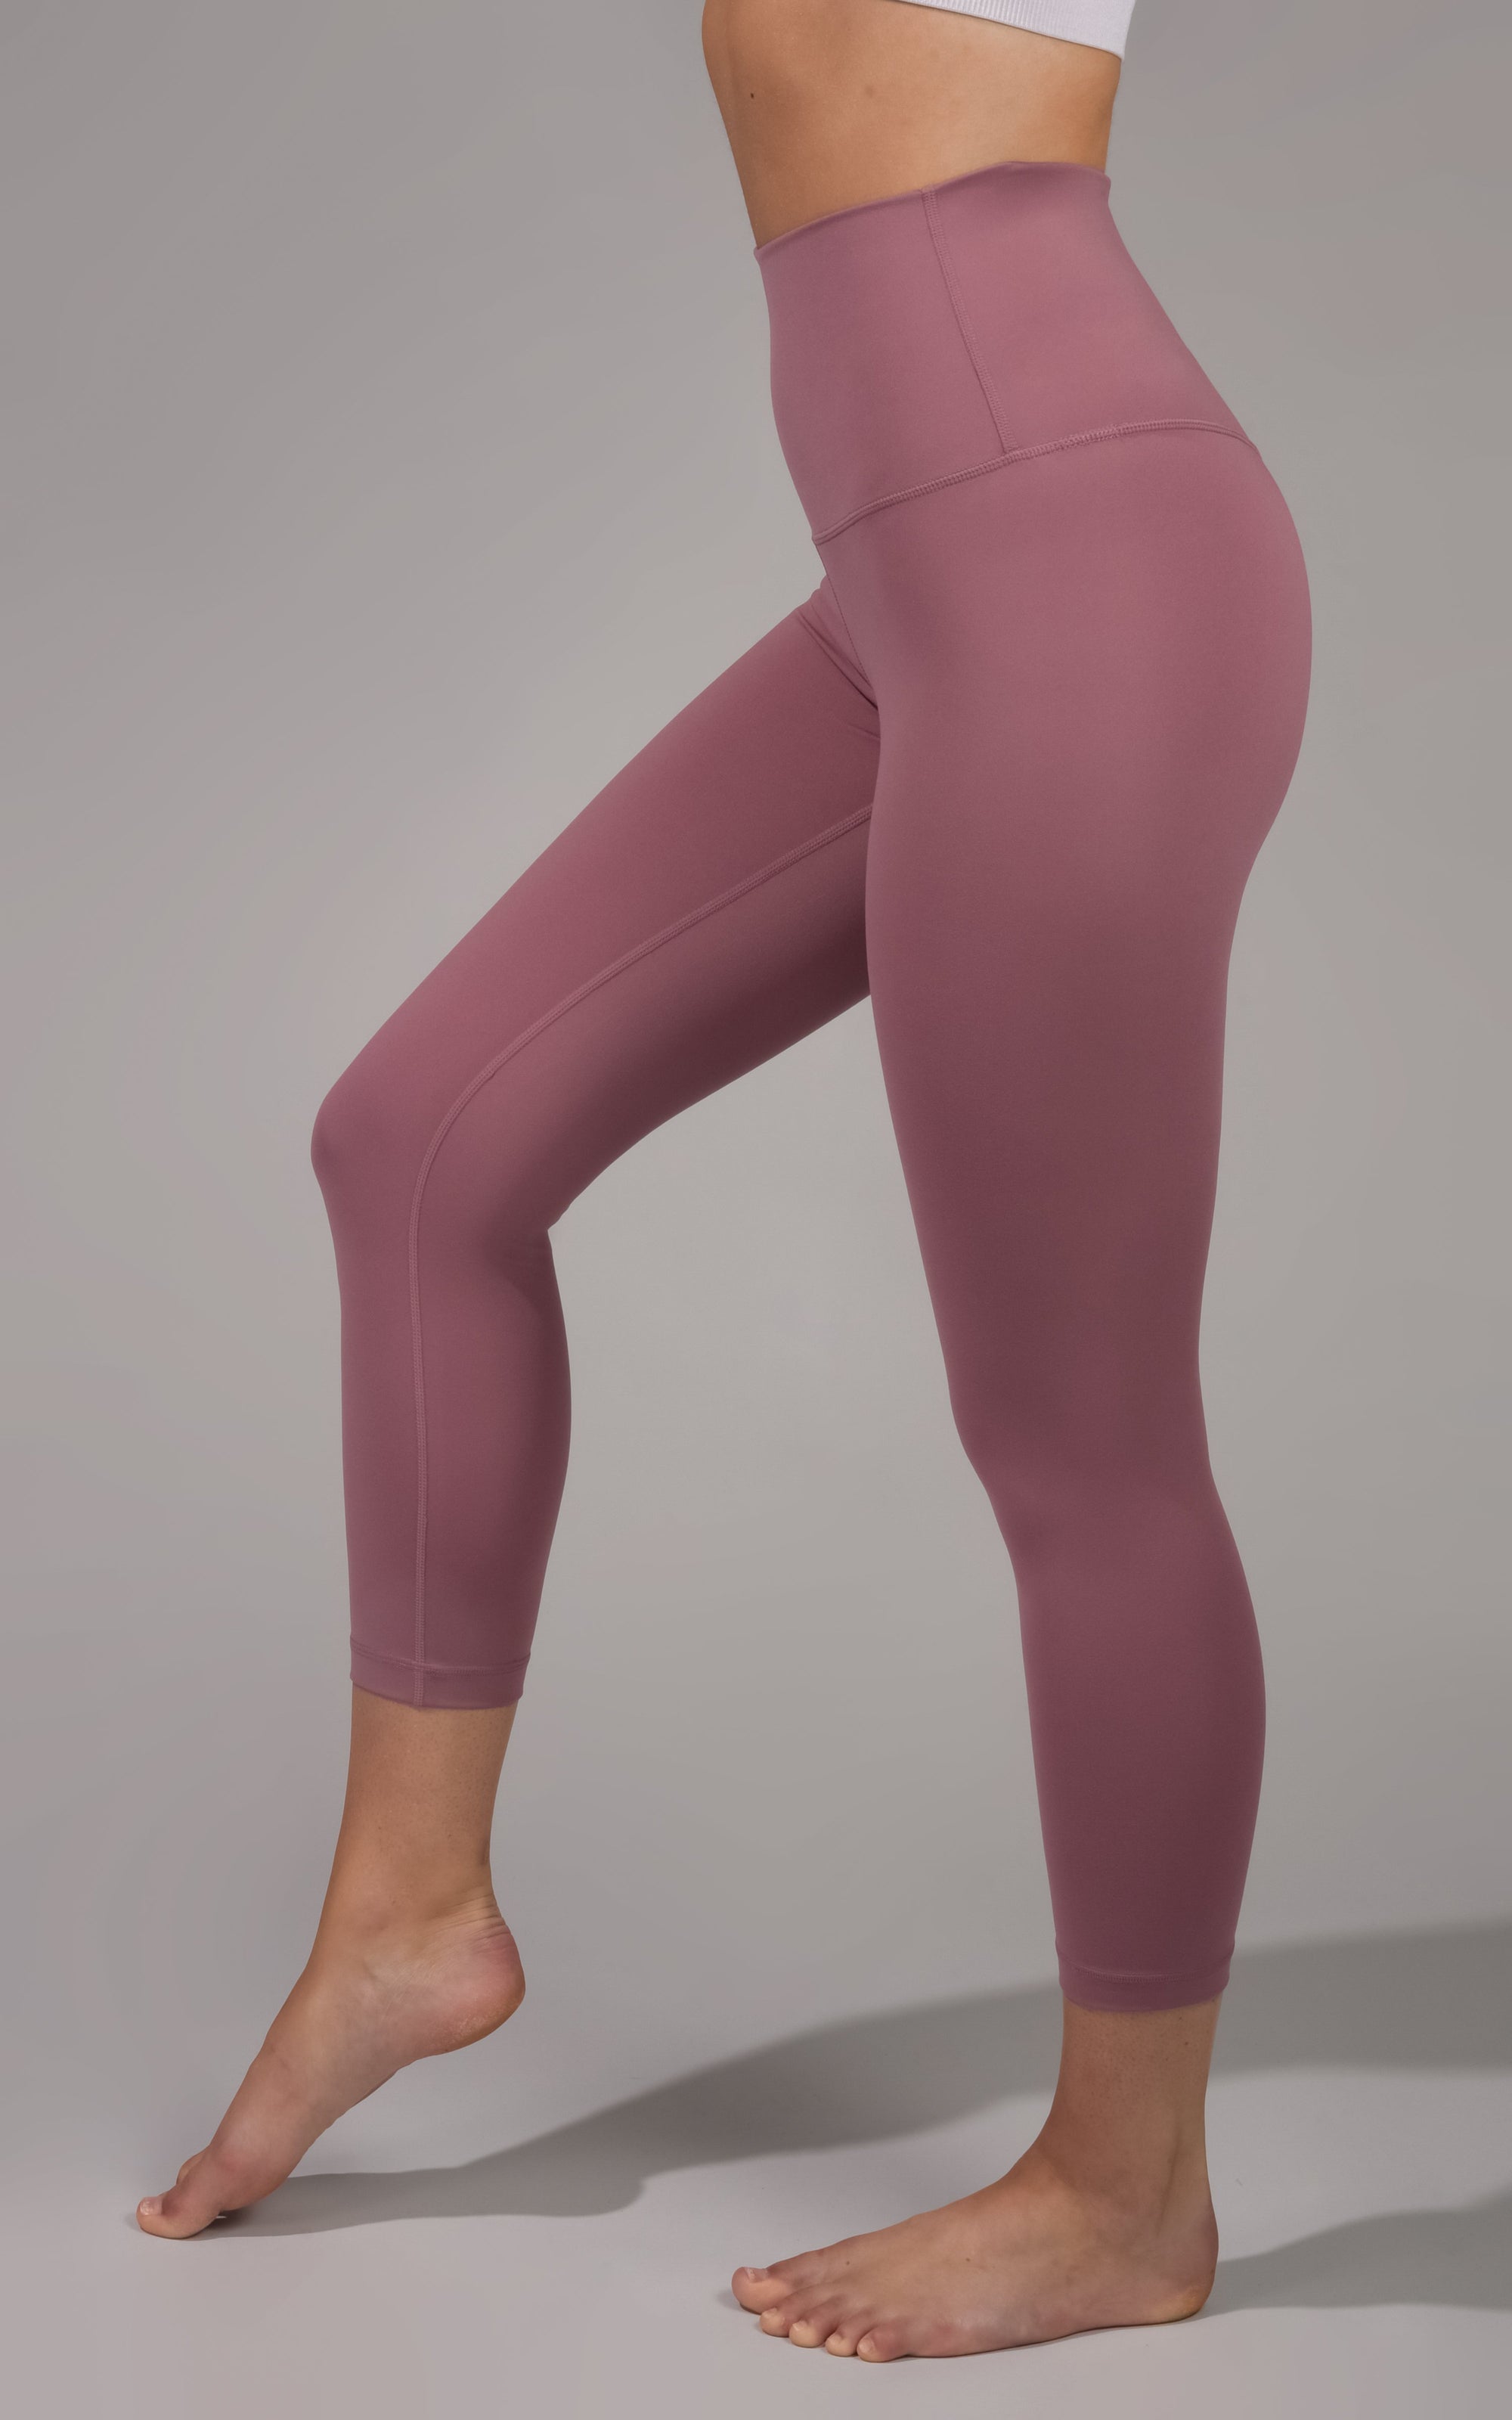 Yogalicious High Waist Ultra Soft Lightweight 7/8 Leggings - High Rise Yoga  Pant 